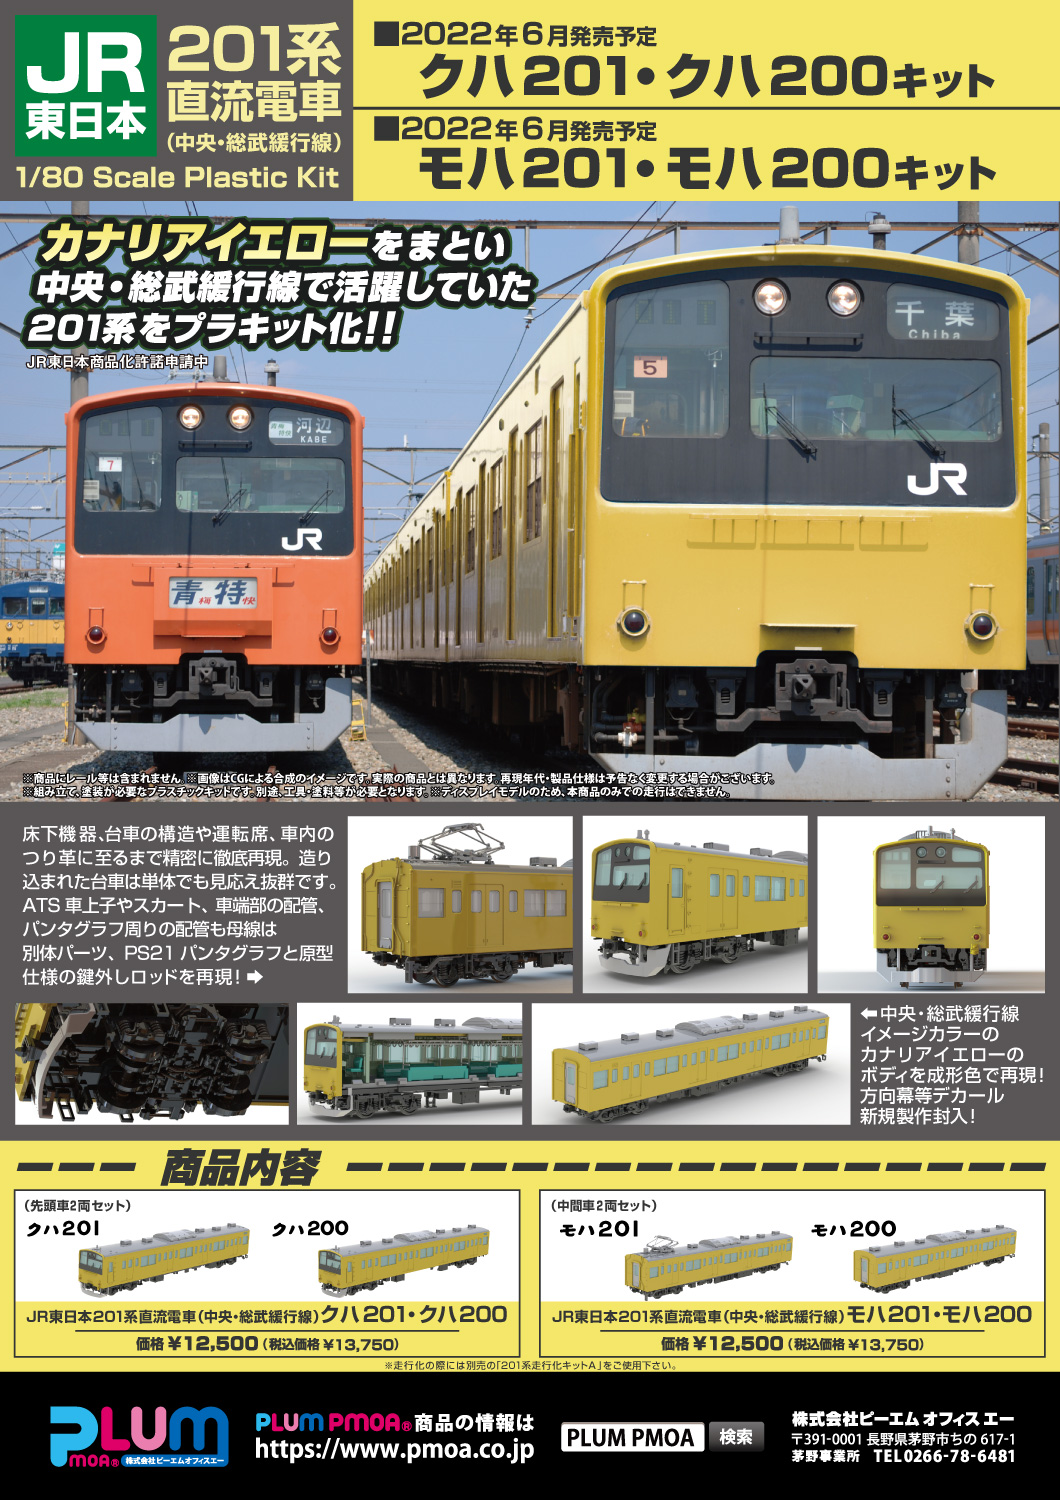 PLUM JR東日本201系直流電車 中央線 クハ201・クハ200 キット